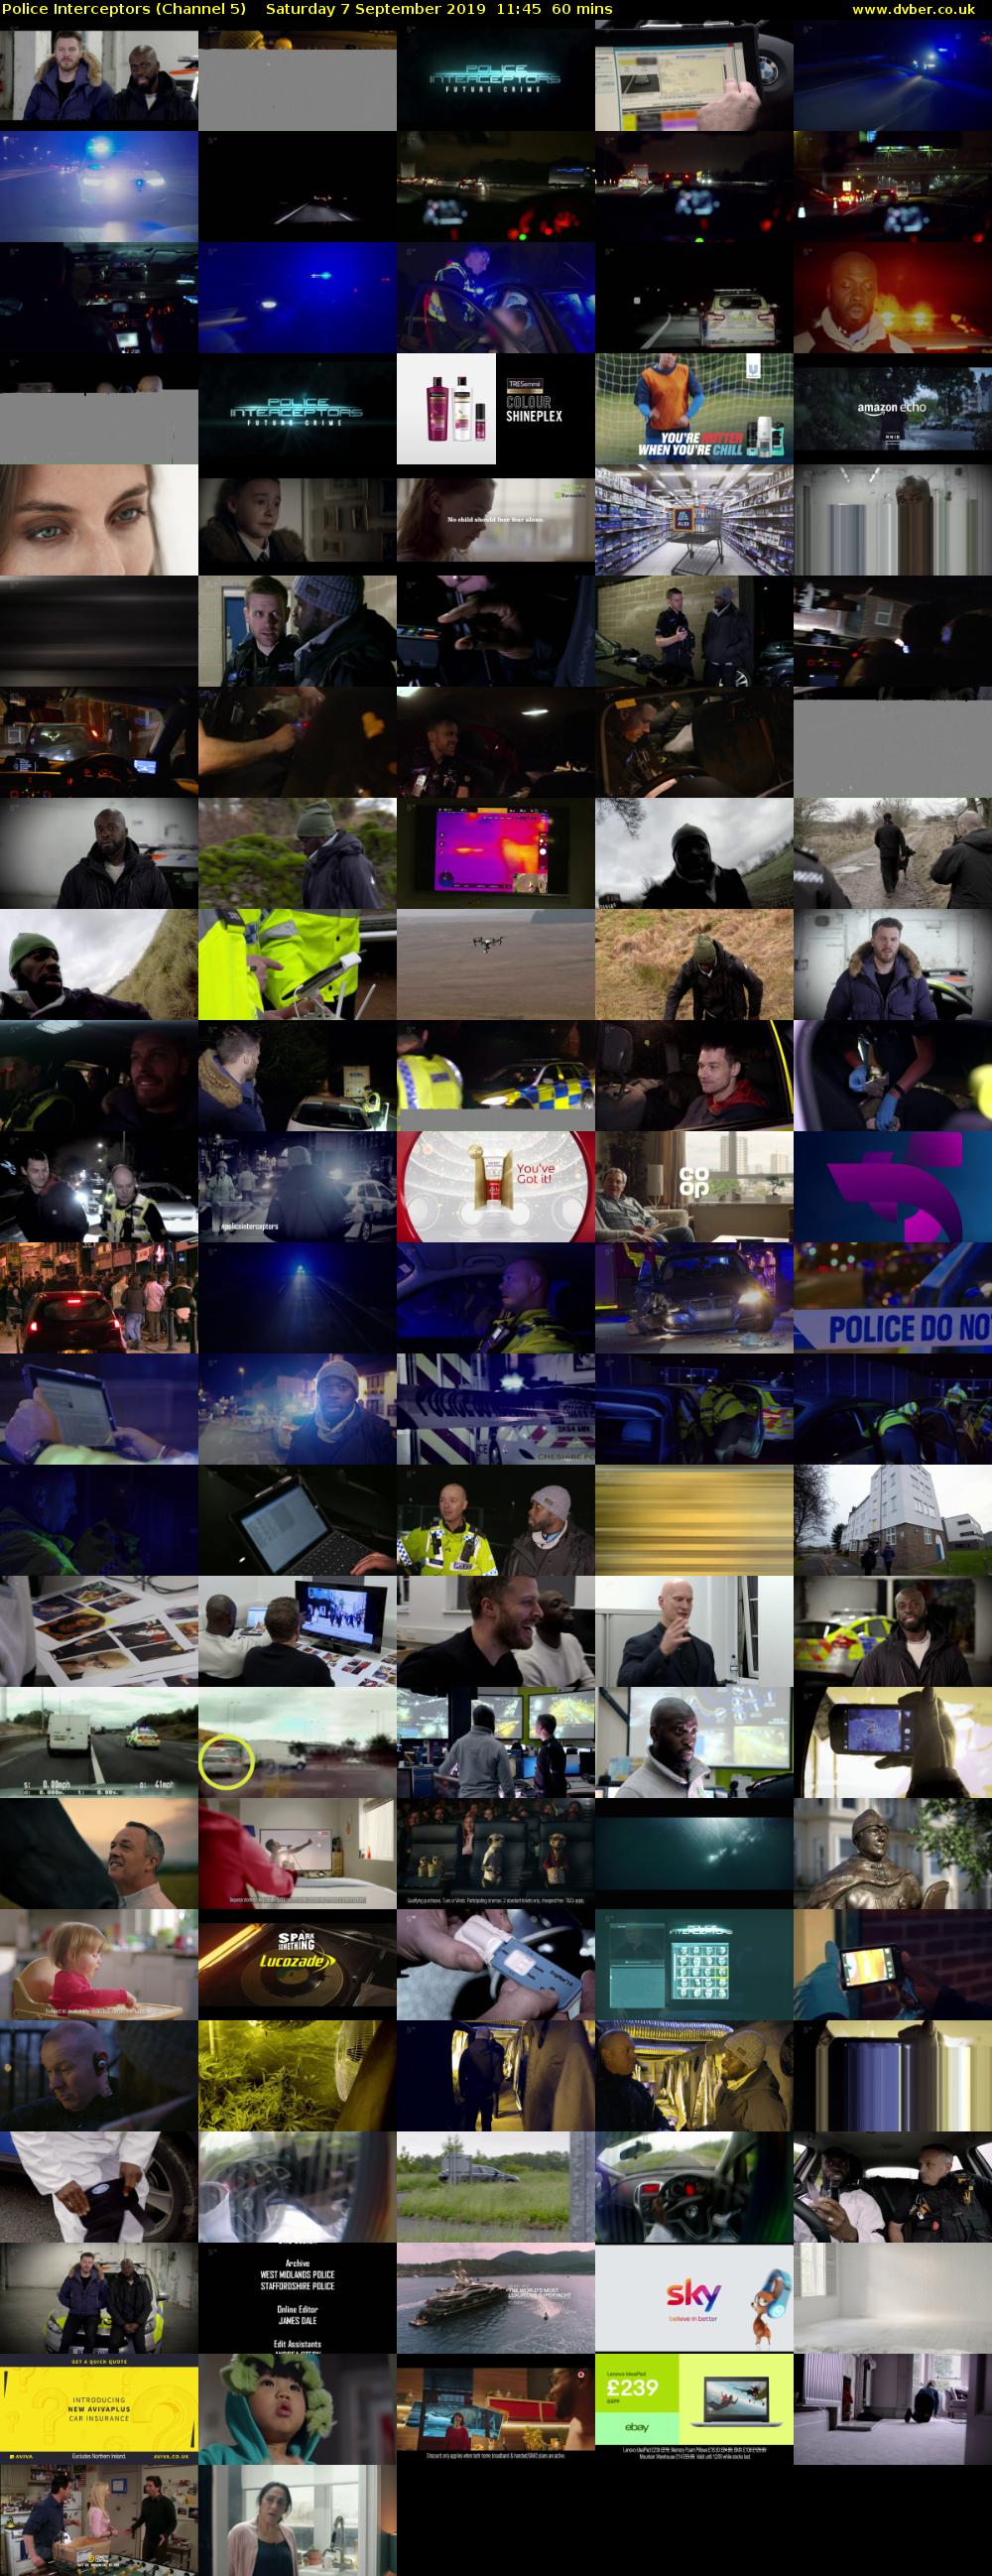 Police Interceptors (Channel 5) Saturday 7 September 2019 11:45 - 12:45